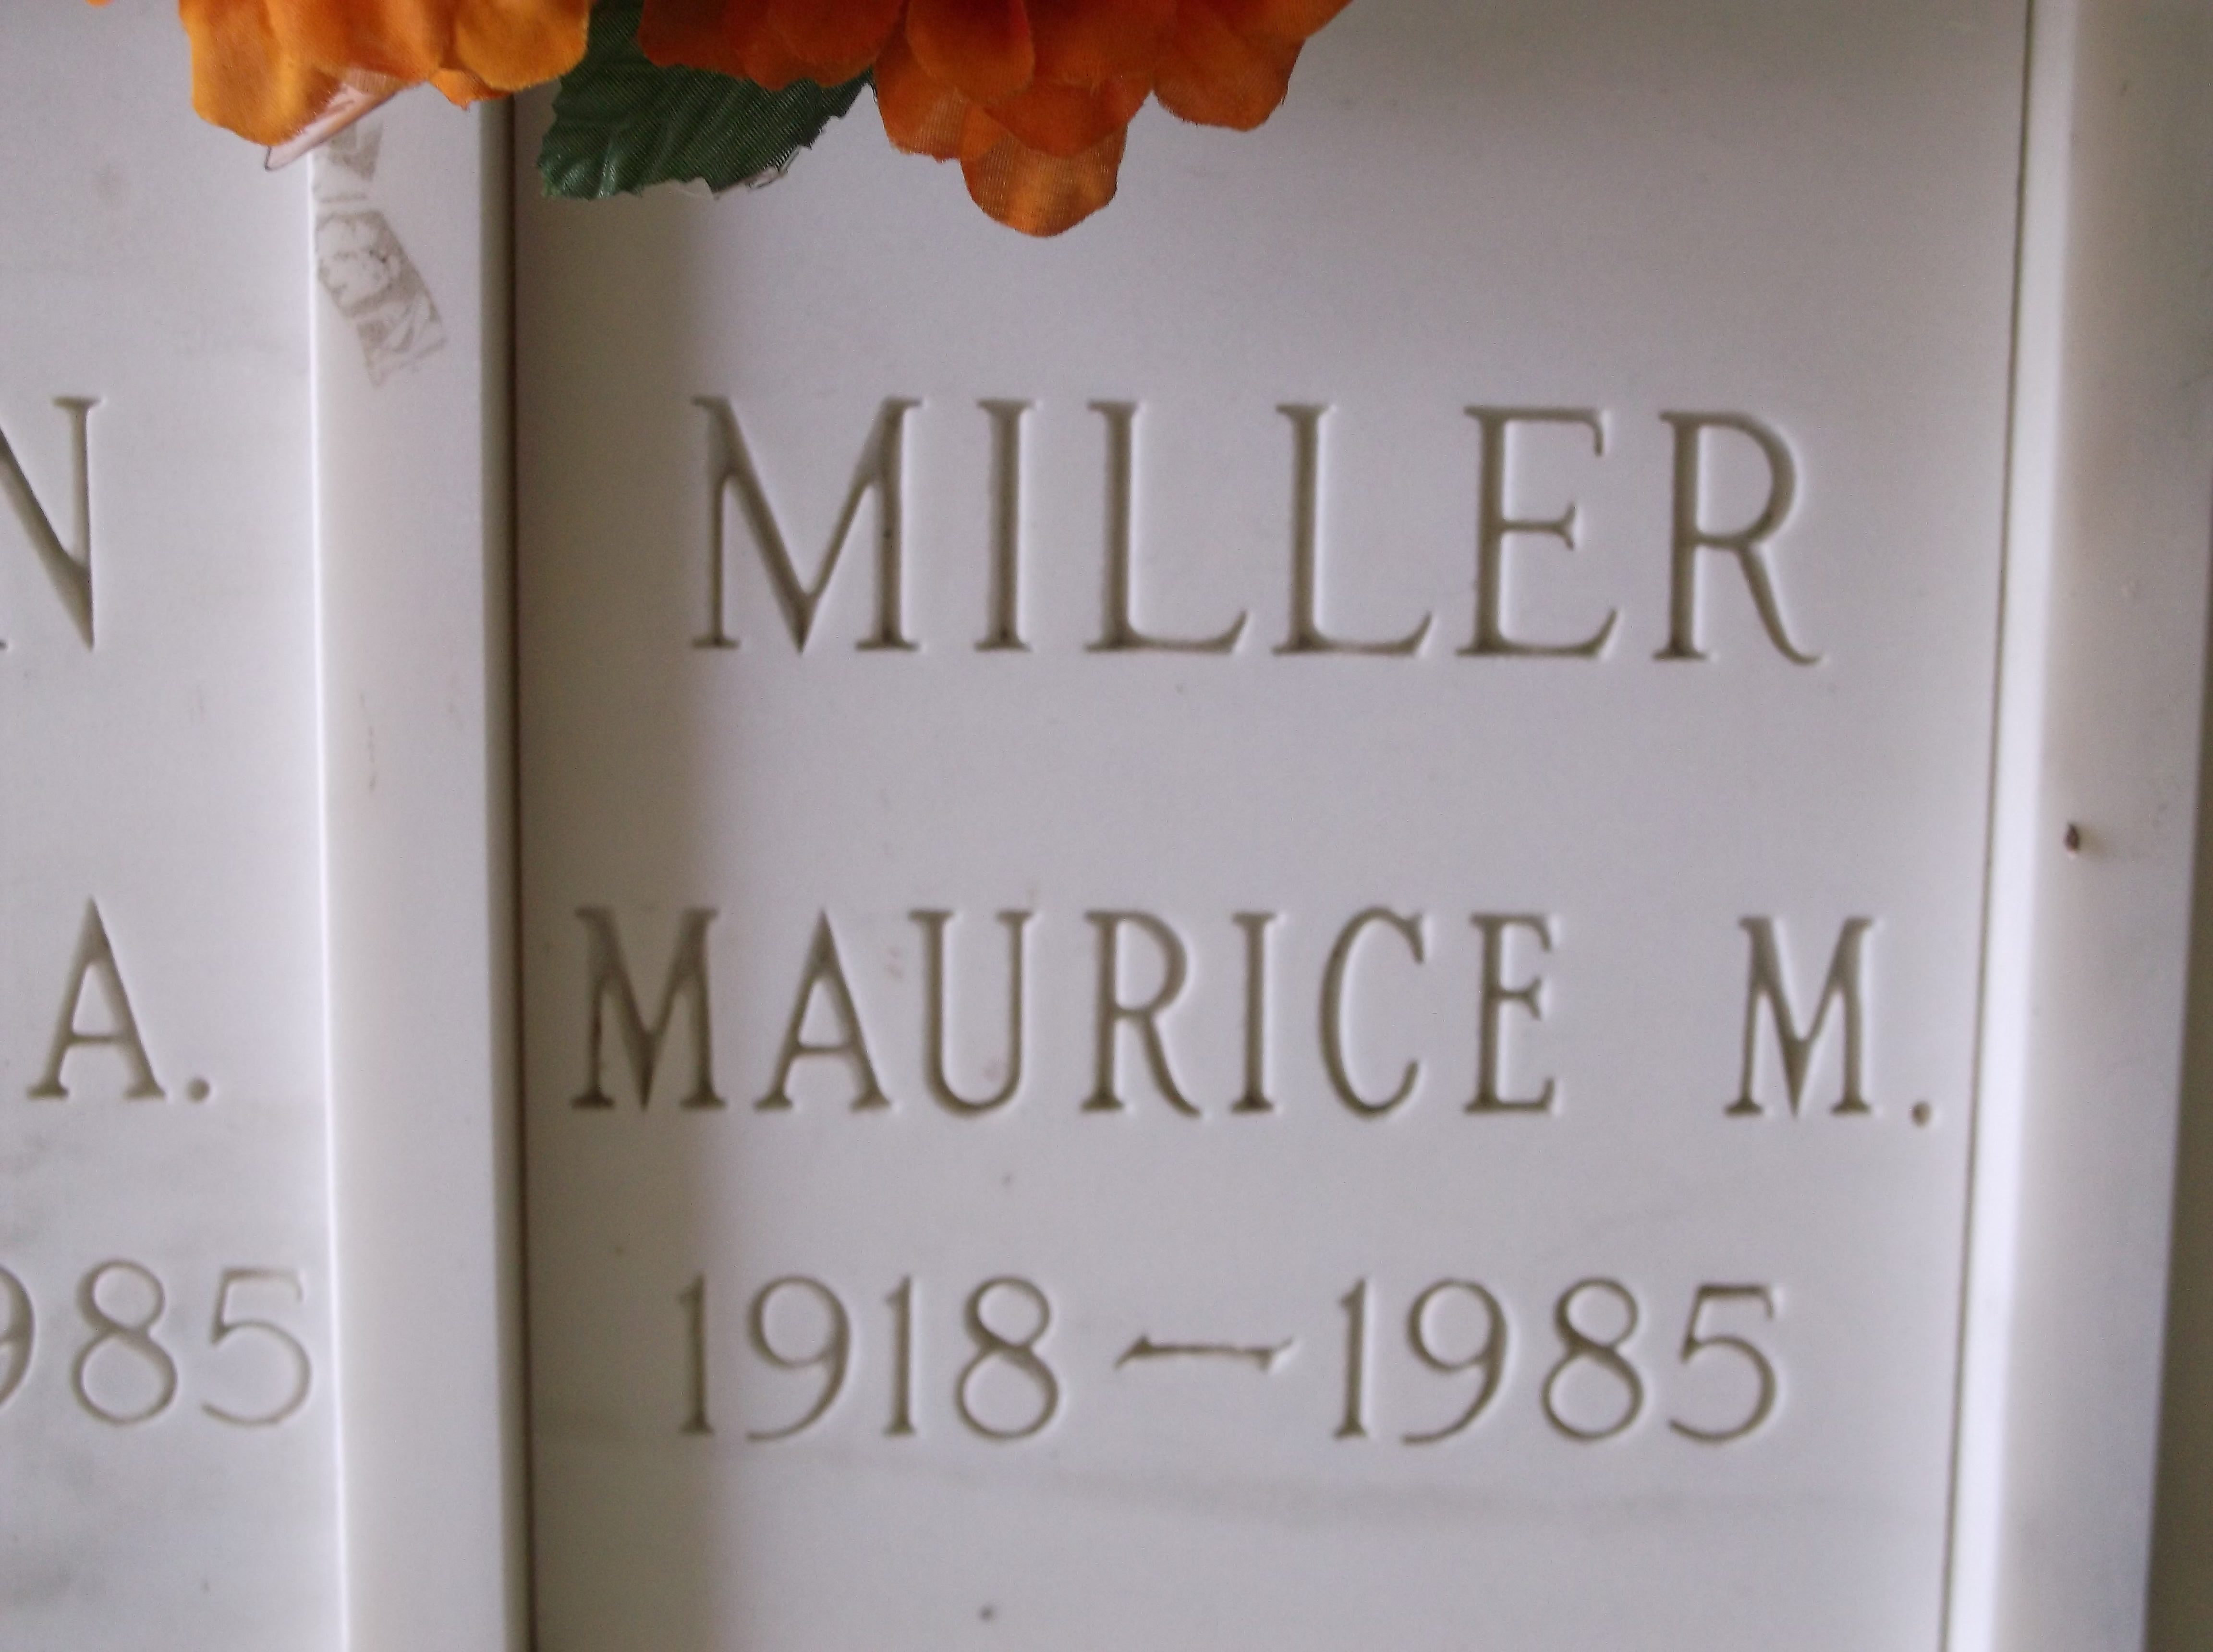 Maurice M Miller